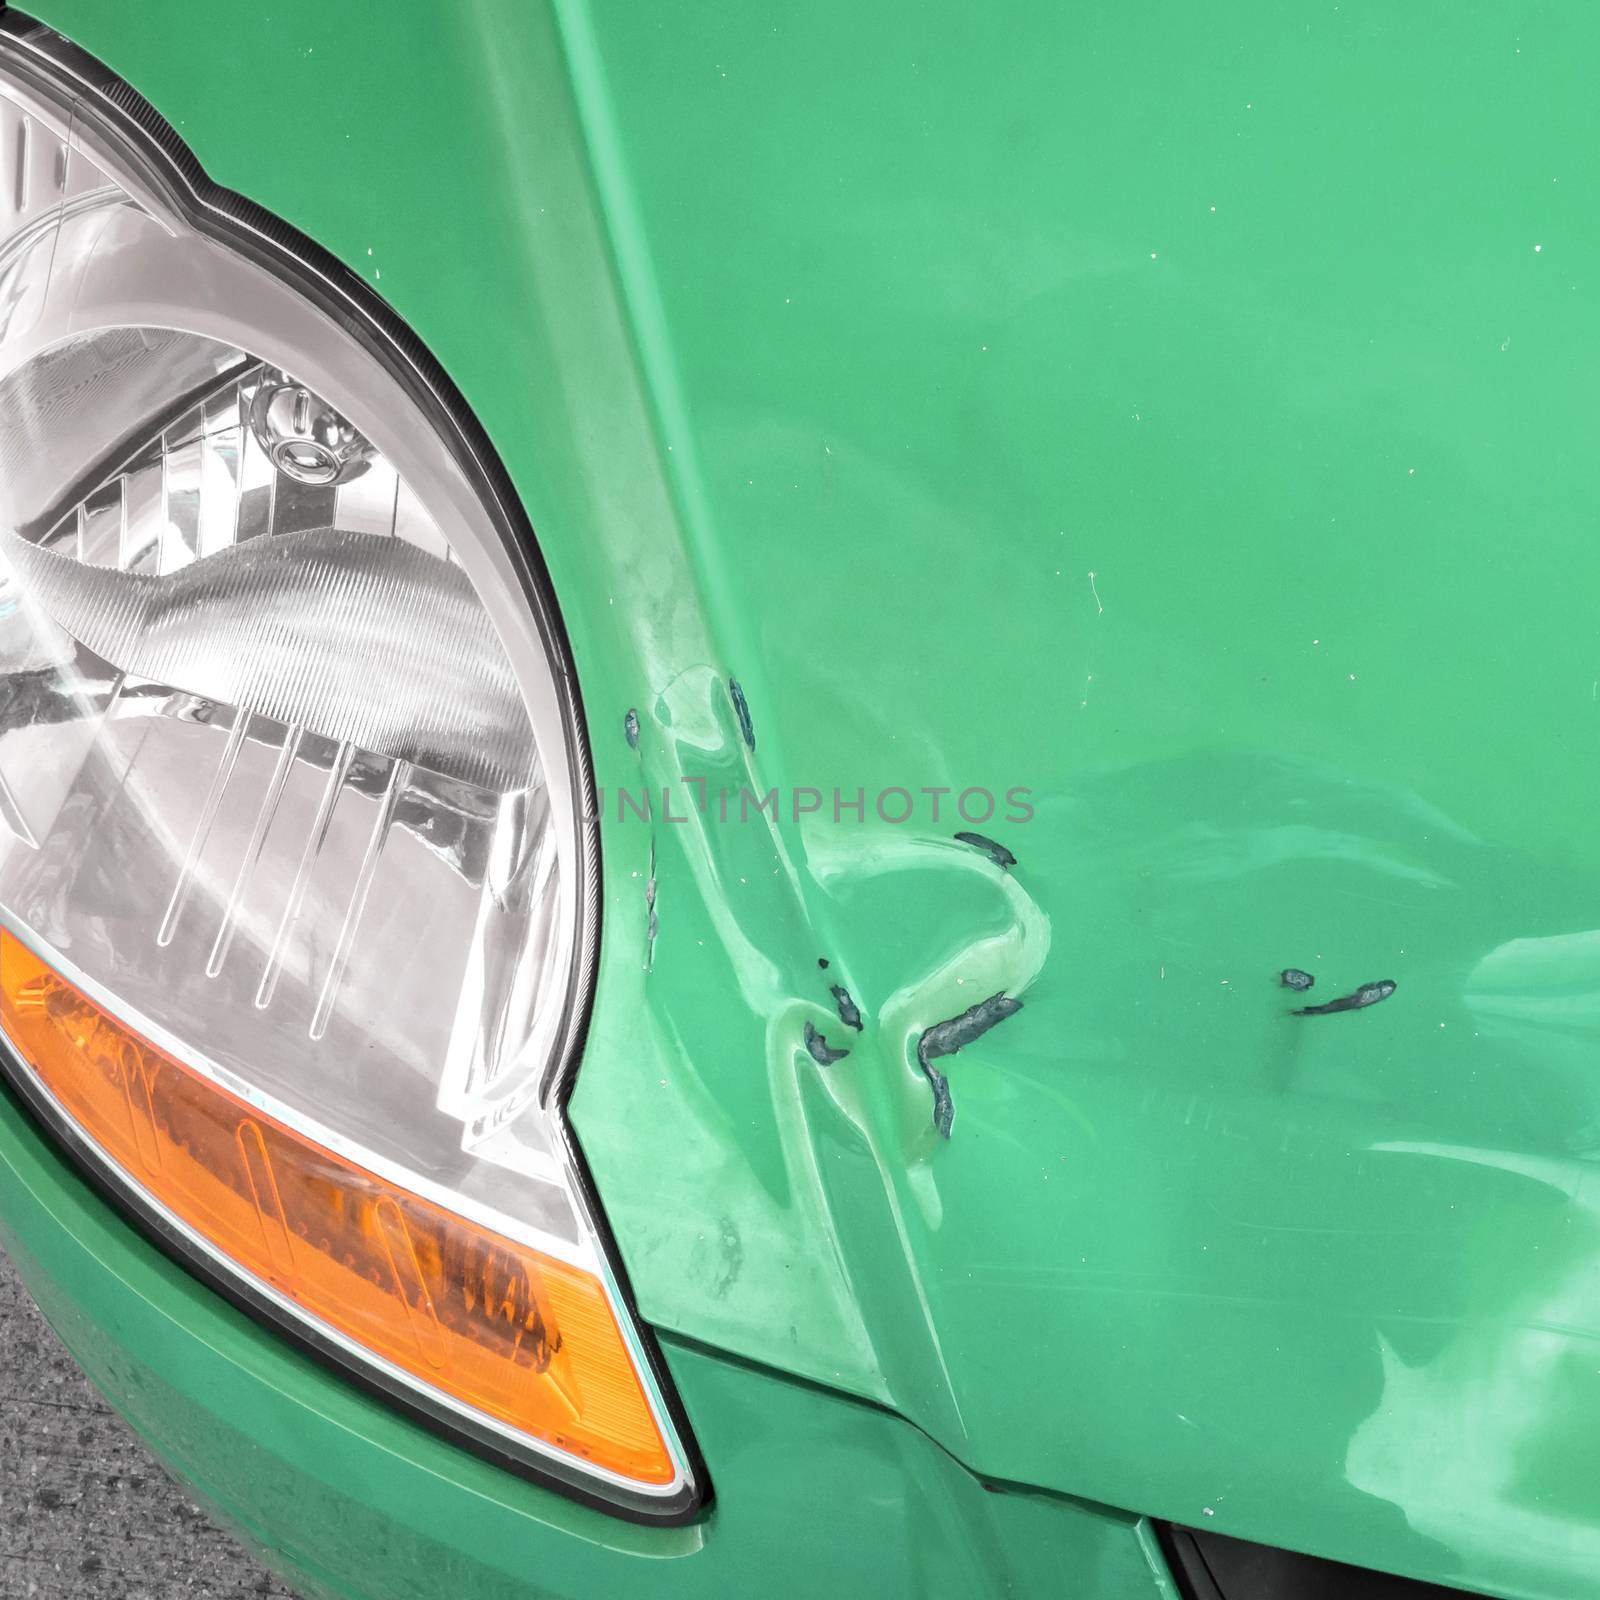 Damaged bodywork. Dents and scratch marks on a car's hood. Close-up.